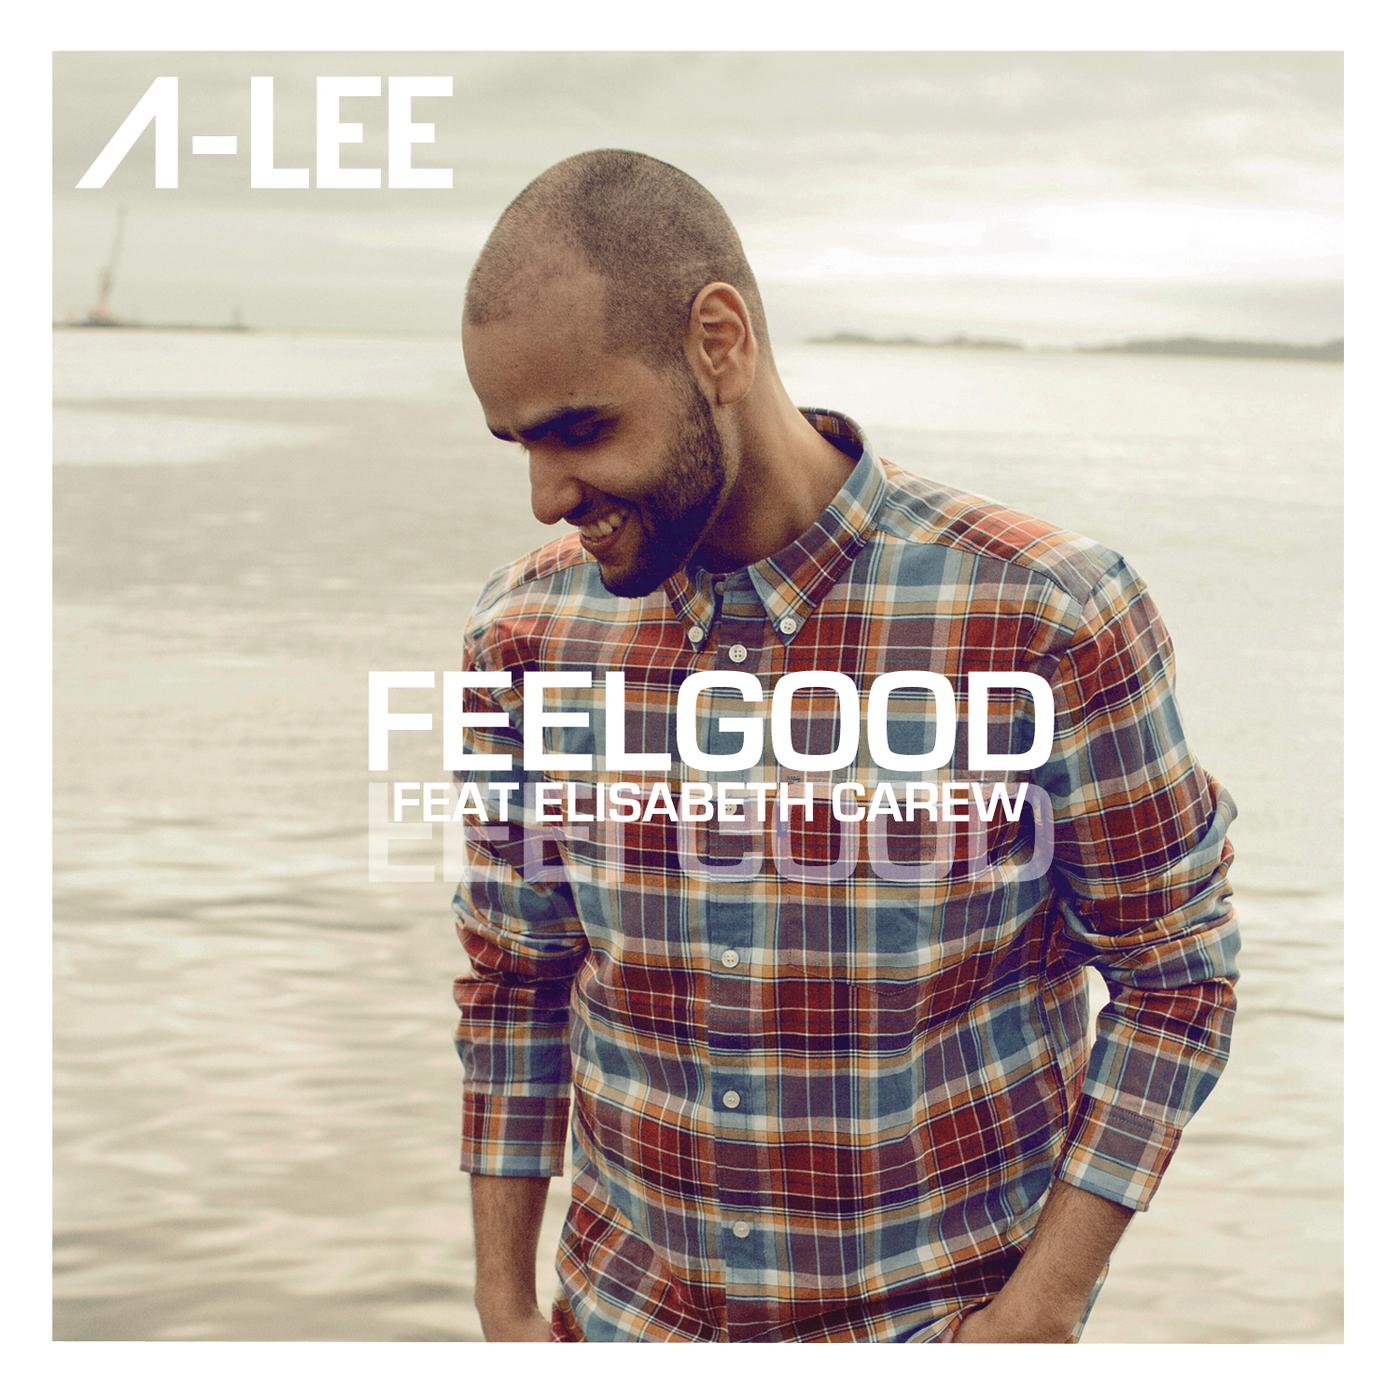 A-Lee - Feelgood (feat. Elisabeth Carew)